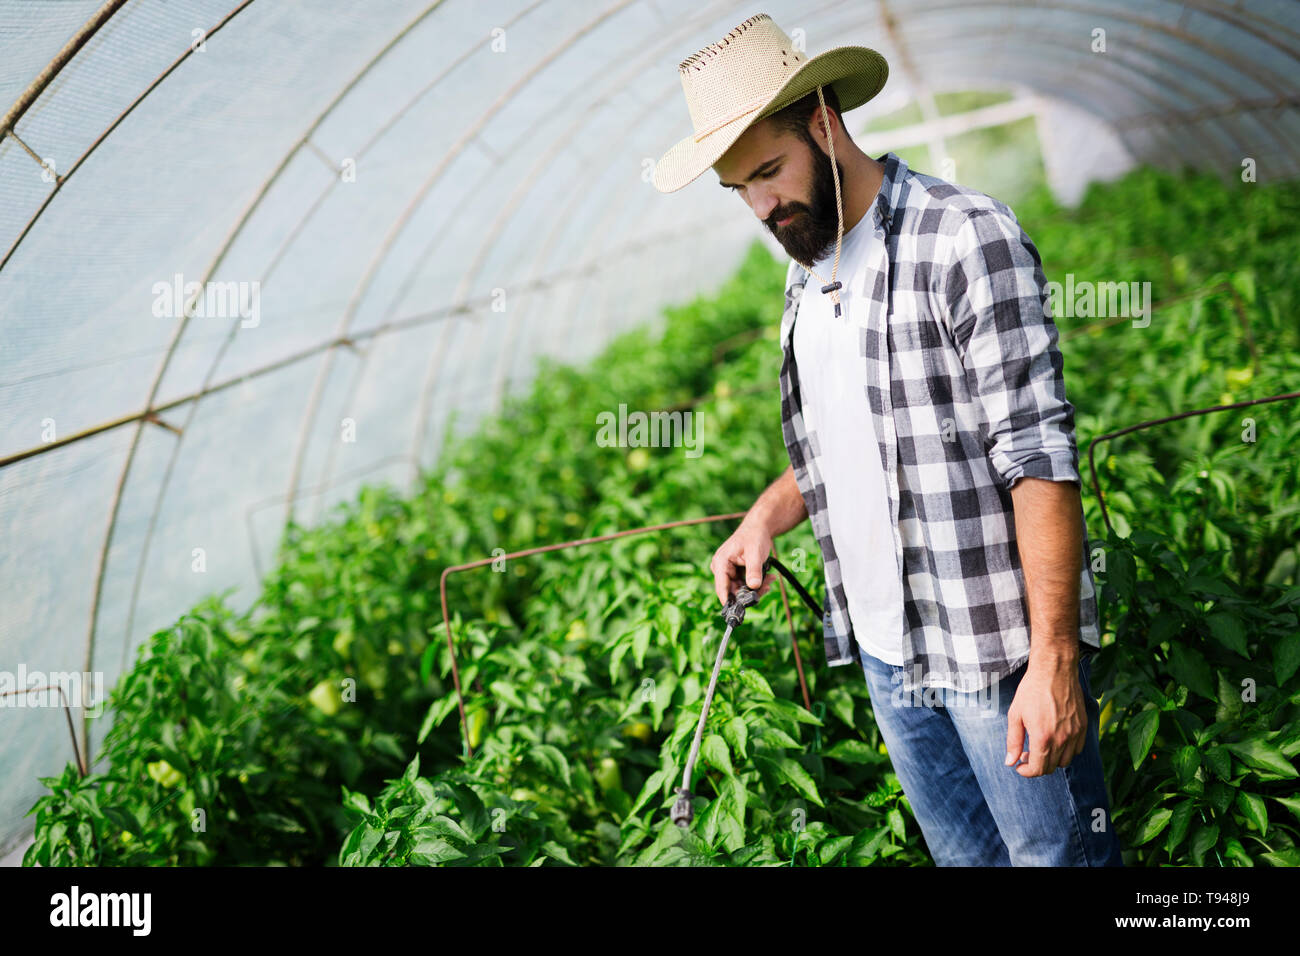 Man spraying tomato plant in greenhouse Stock Photo